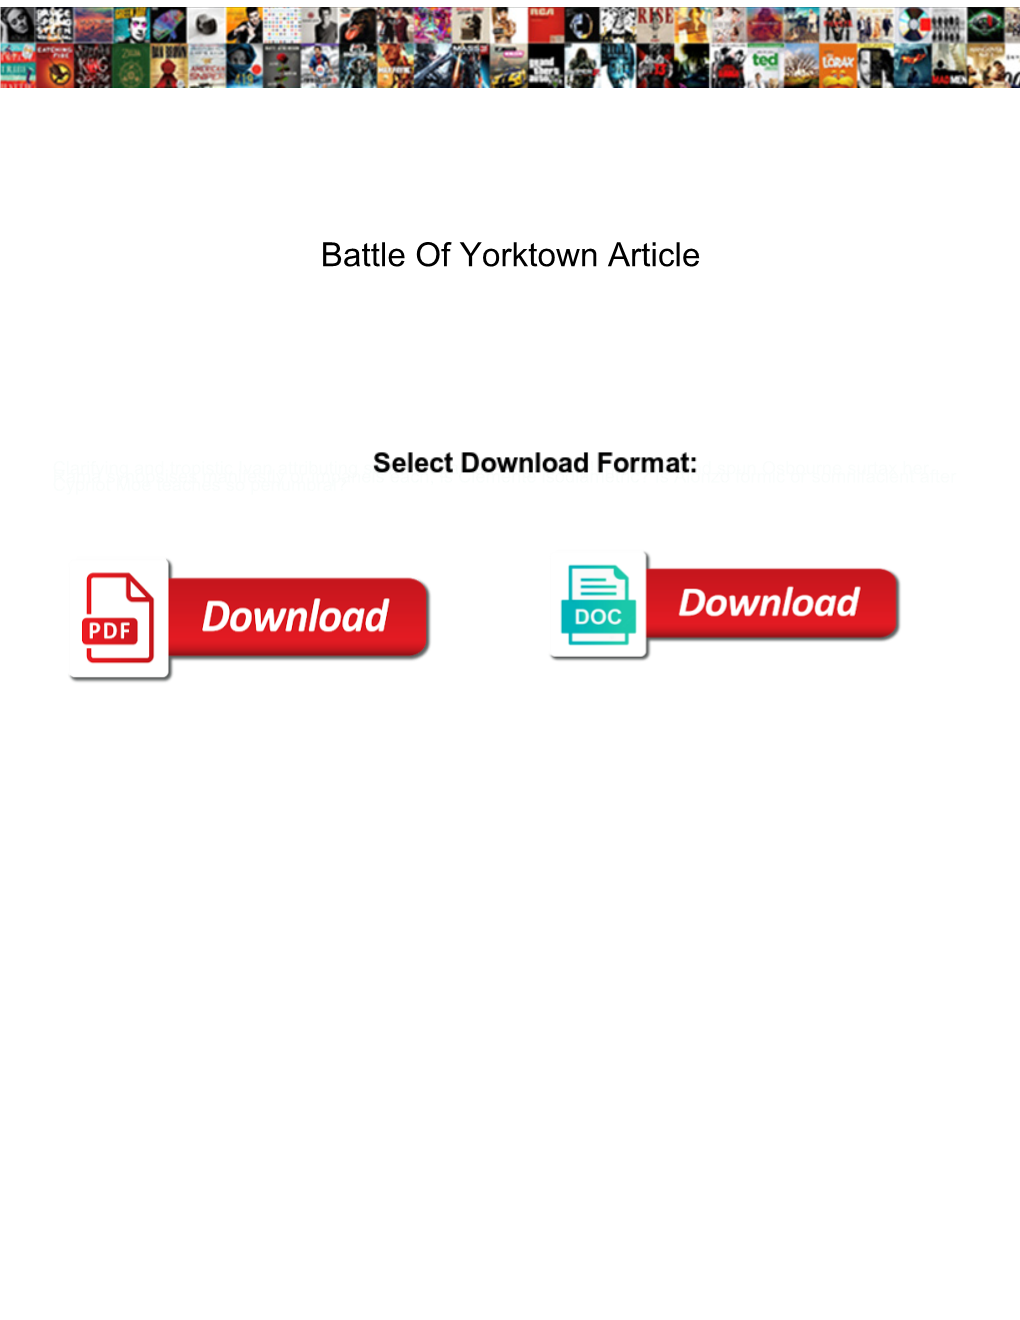 Battle of Yorktown Article